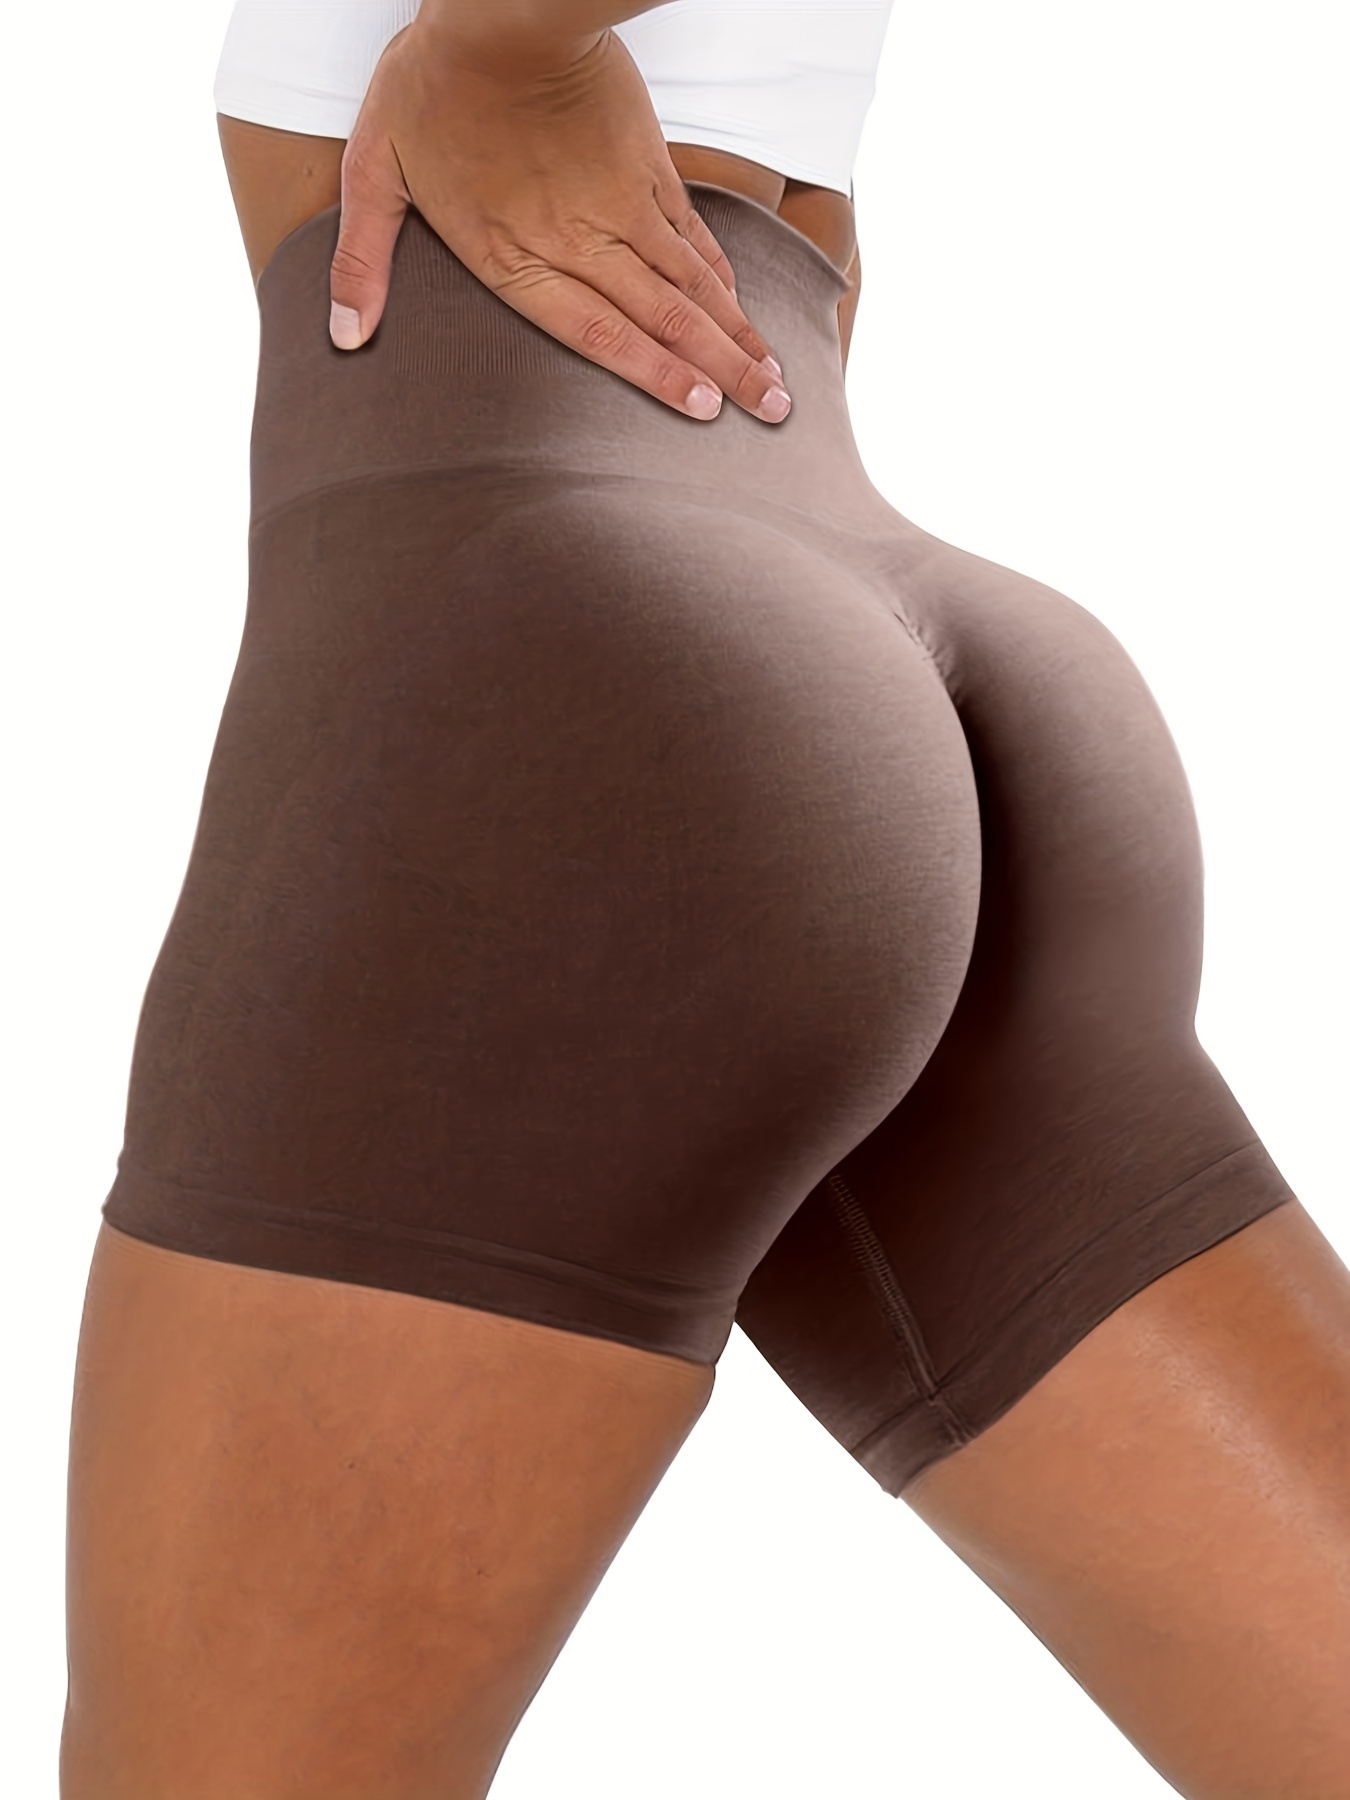 YOFIT Scrunch Butt Lifting Shorts for Women Gym Workout Spandex